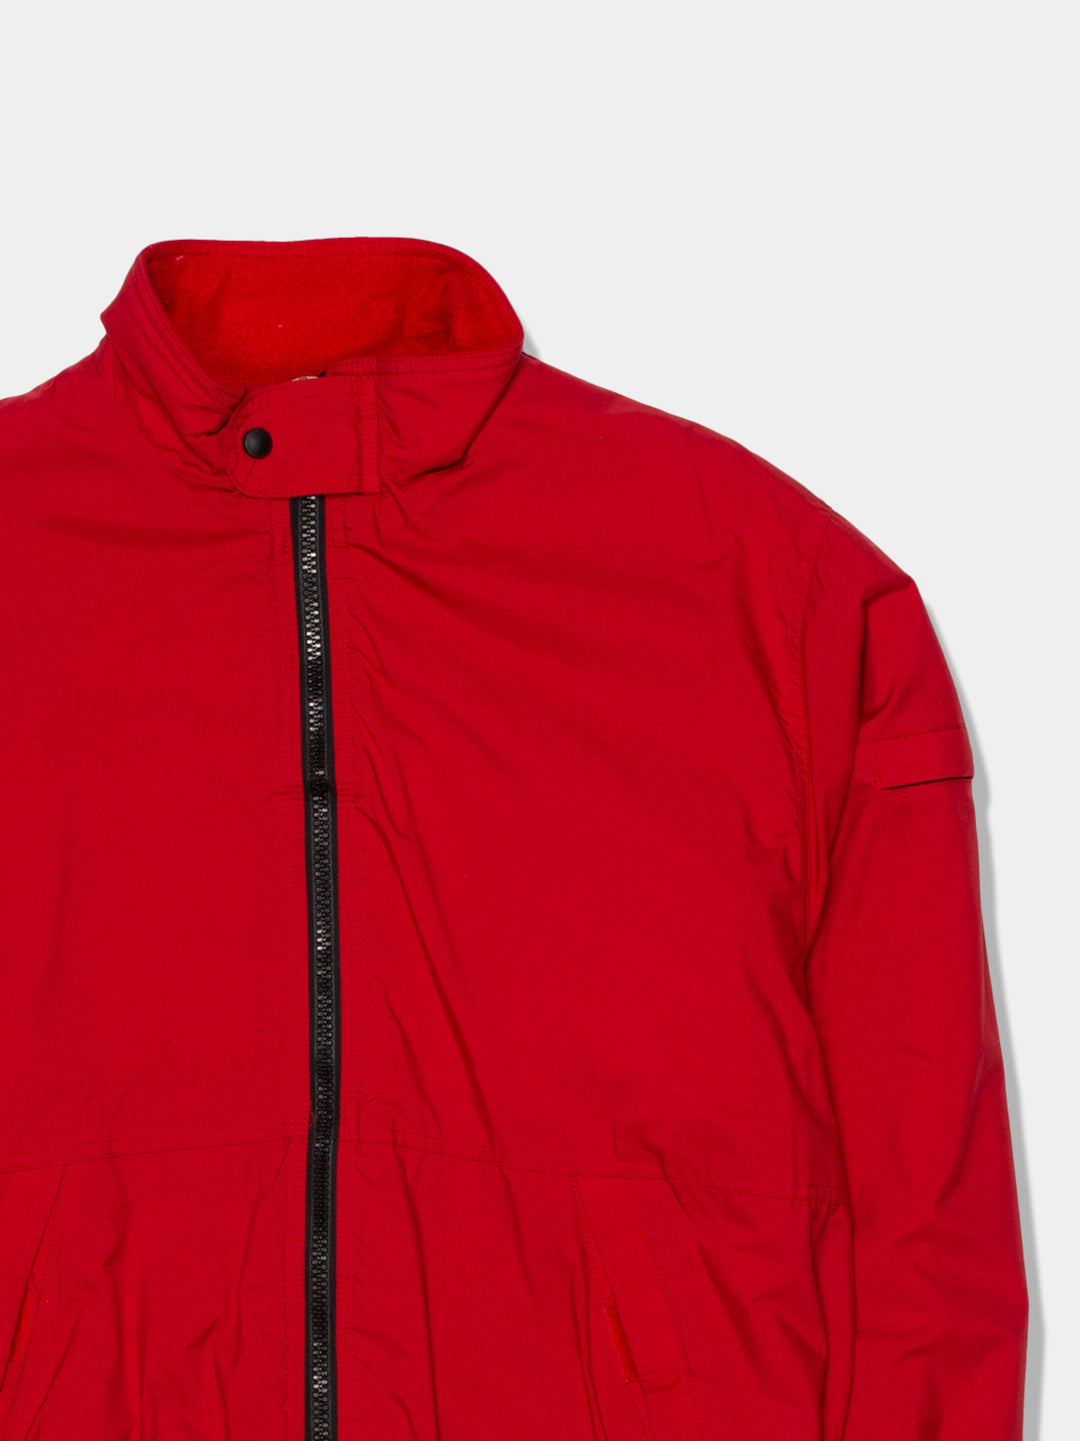 Vintage GAP Red Lined Jacket (S)